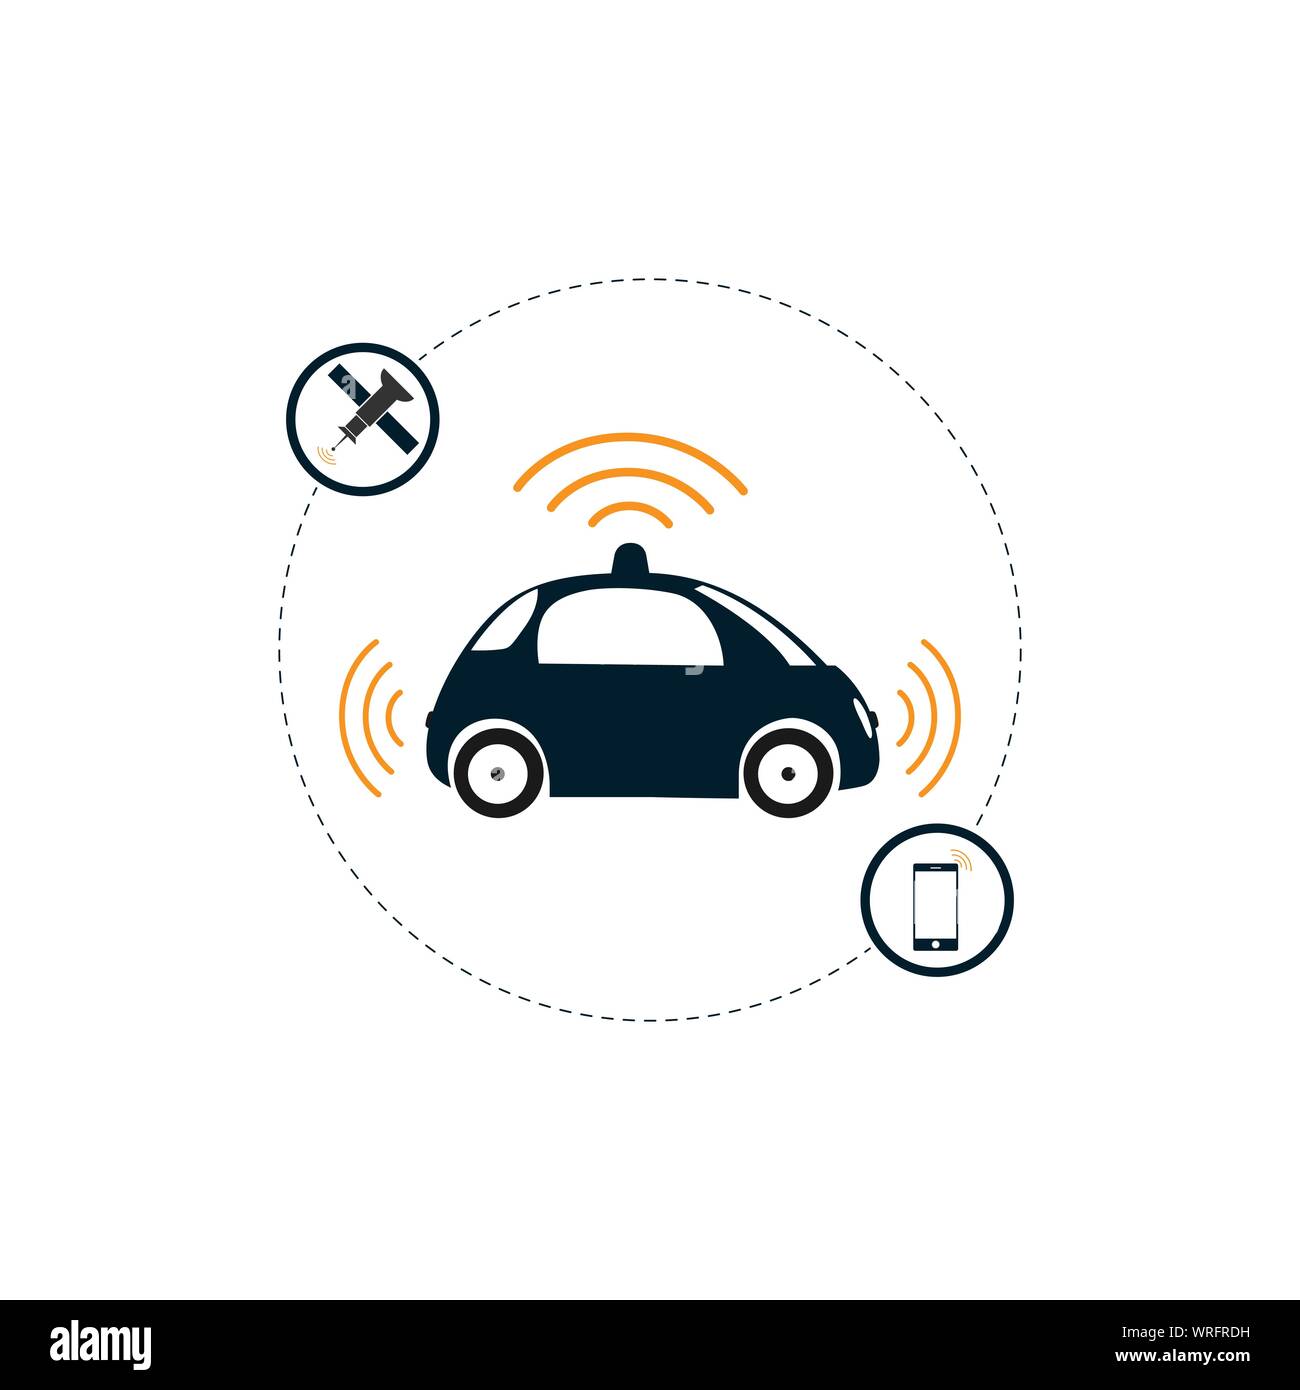 Autonomous infographic self driving car vector image design illustration Stock Vector